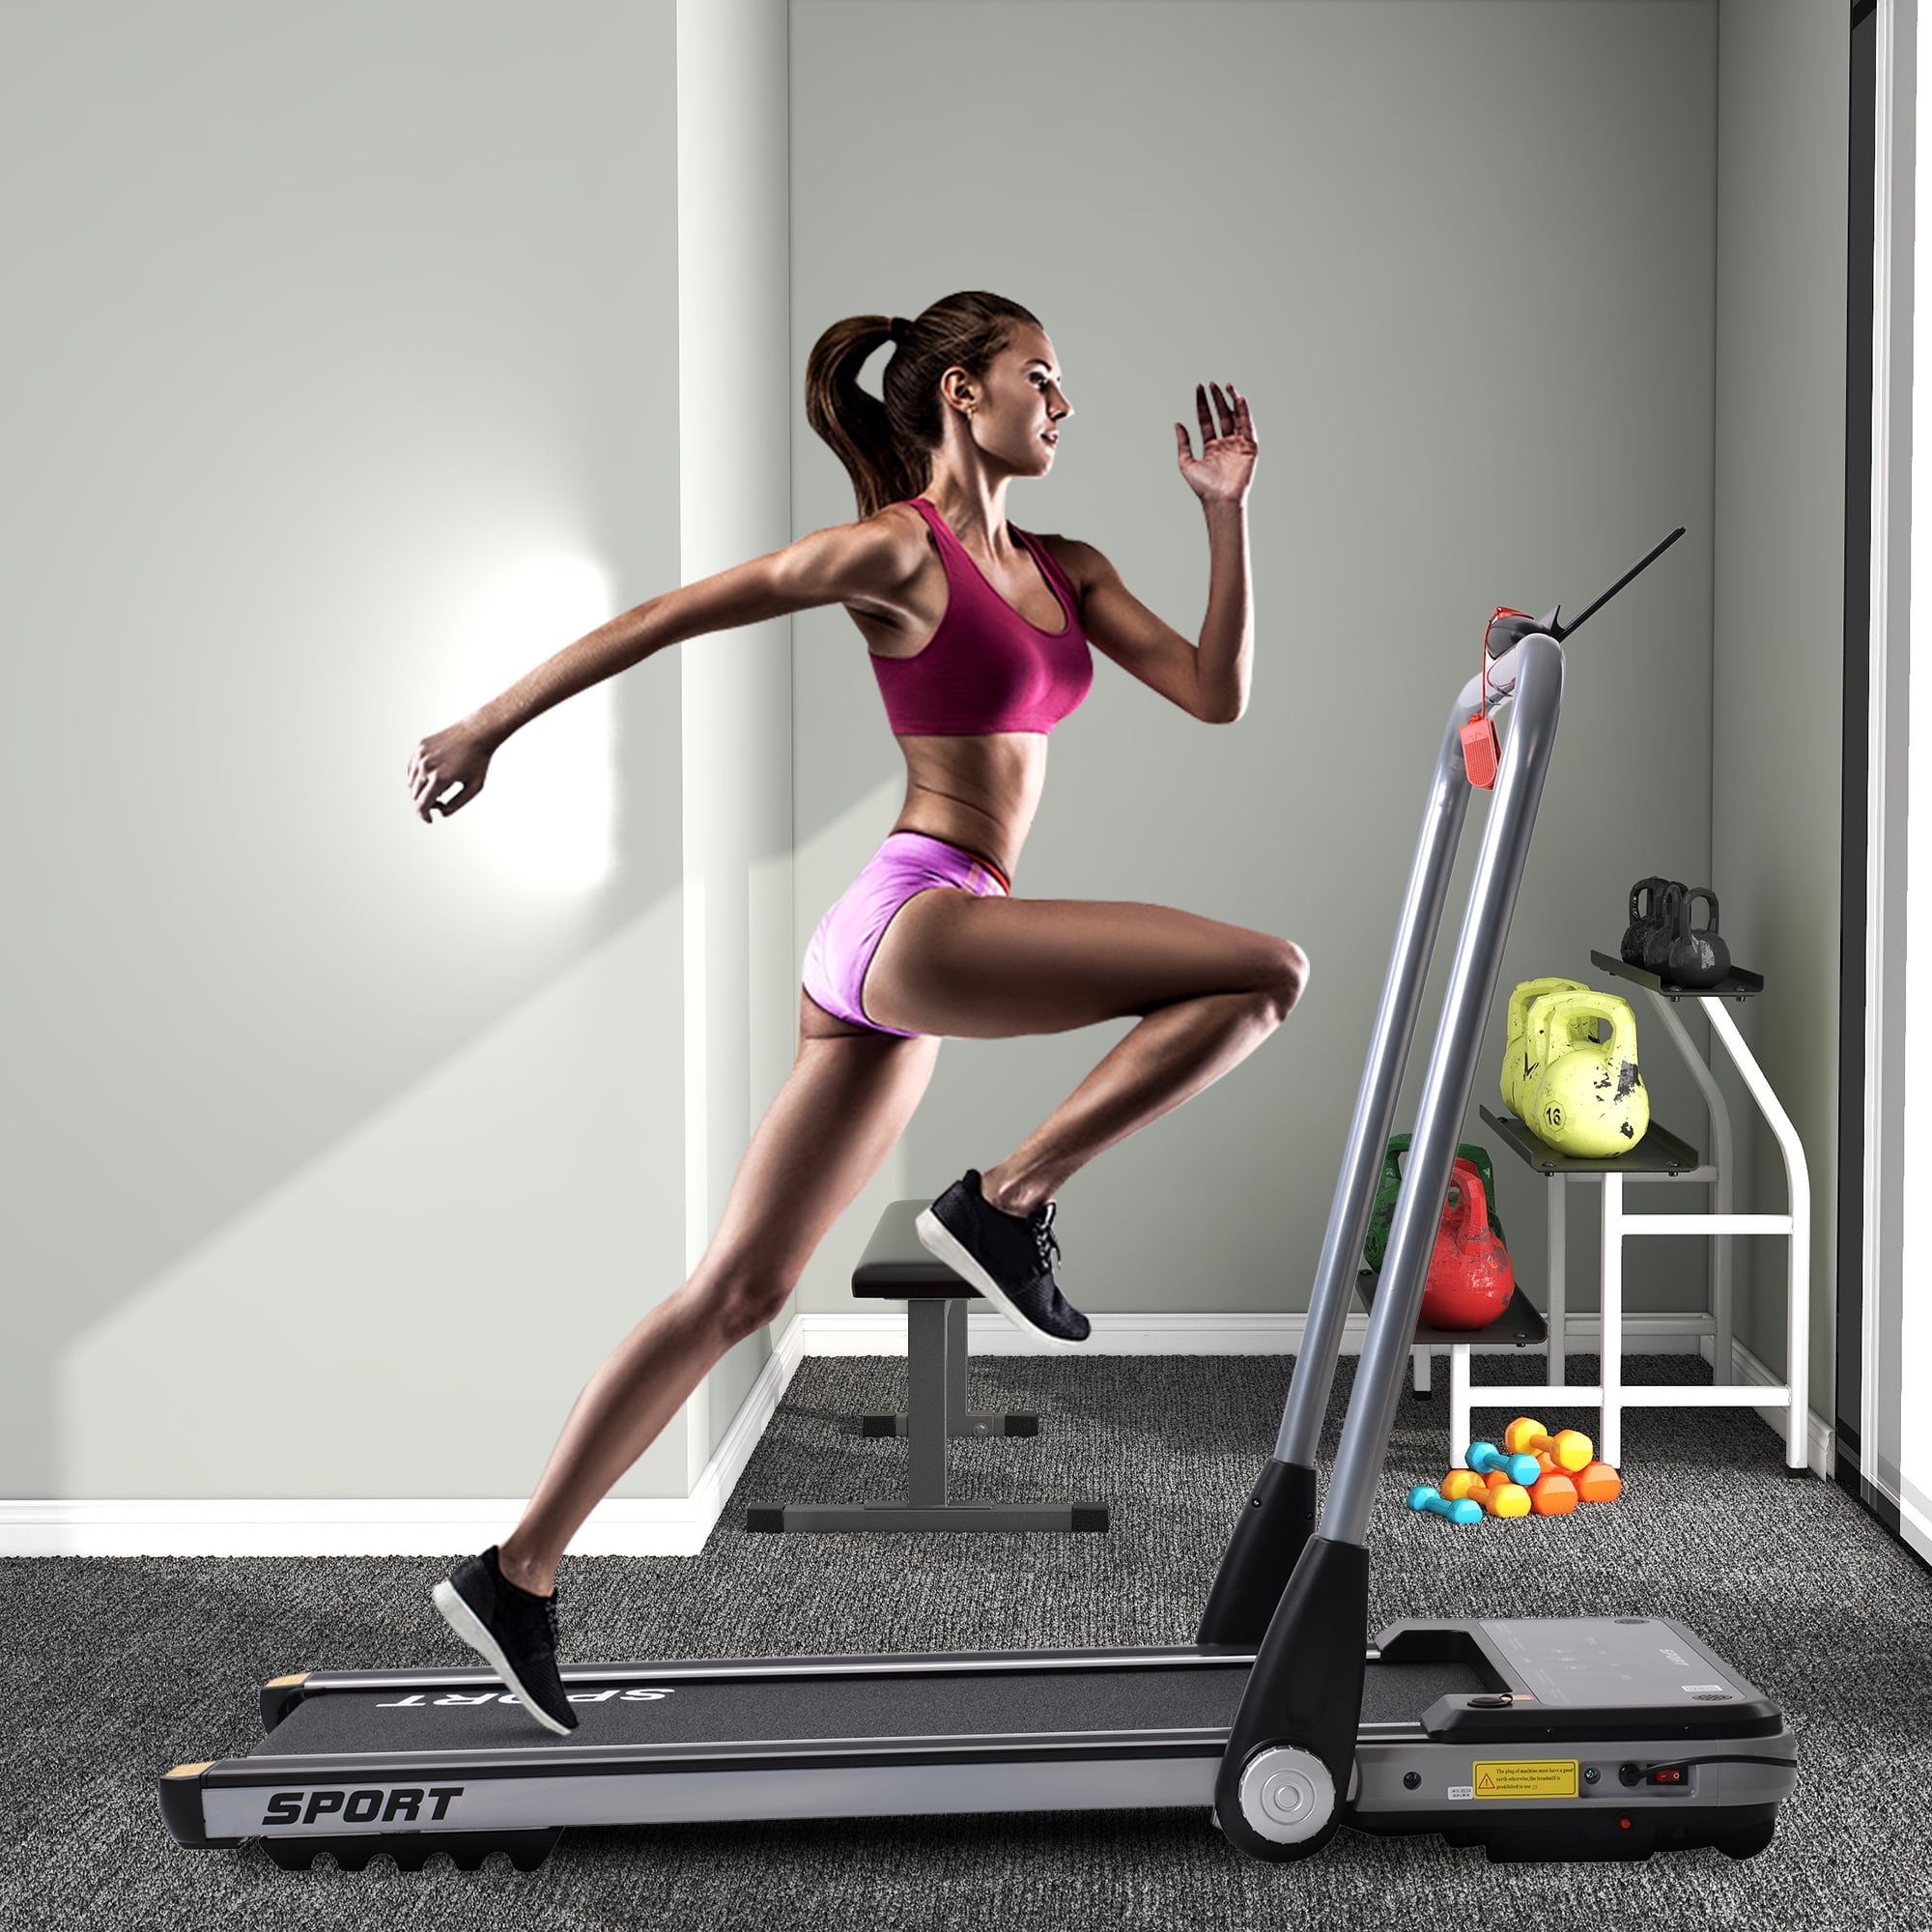 Treadmill LED display Bluetooth speaker remote control Office Gym 2.5 HP Black 